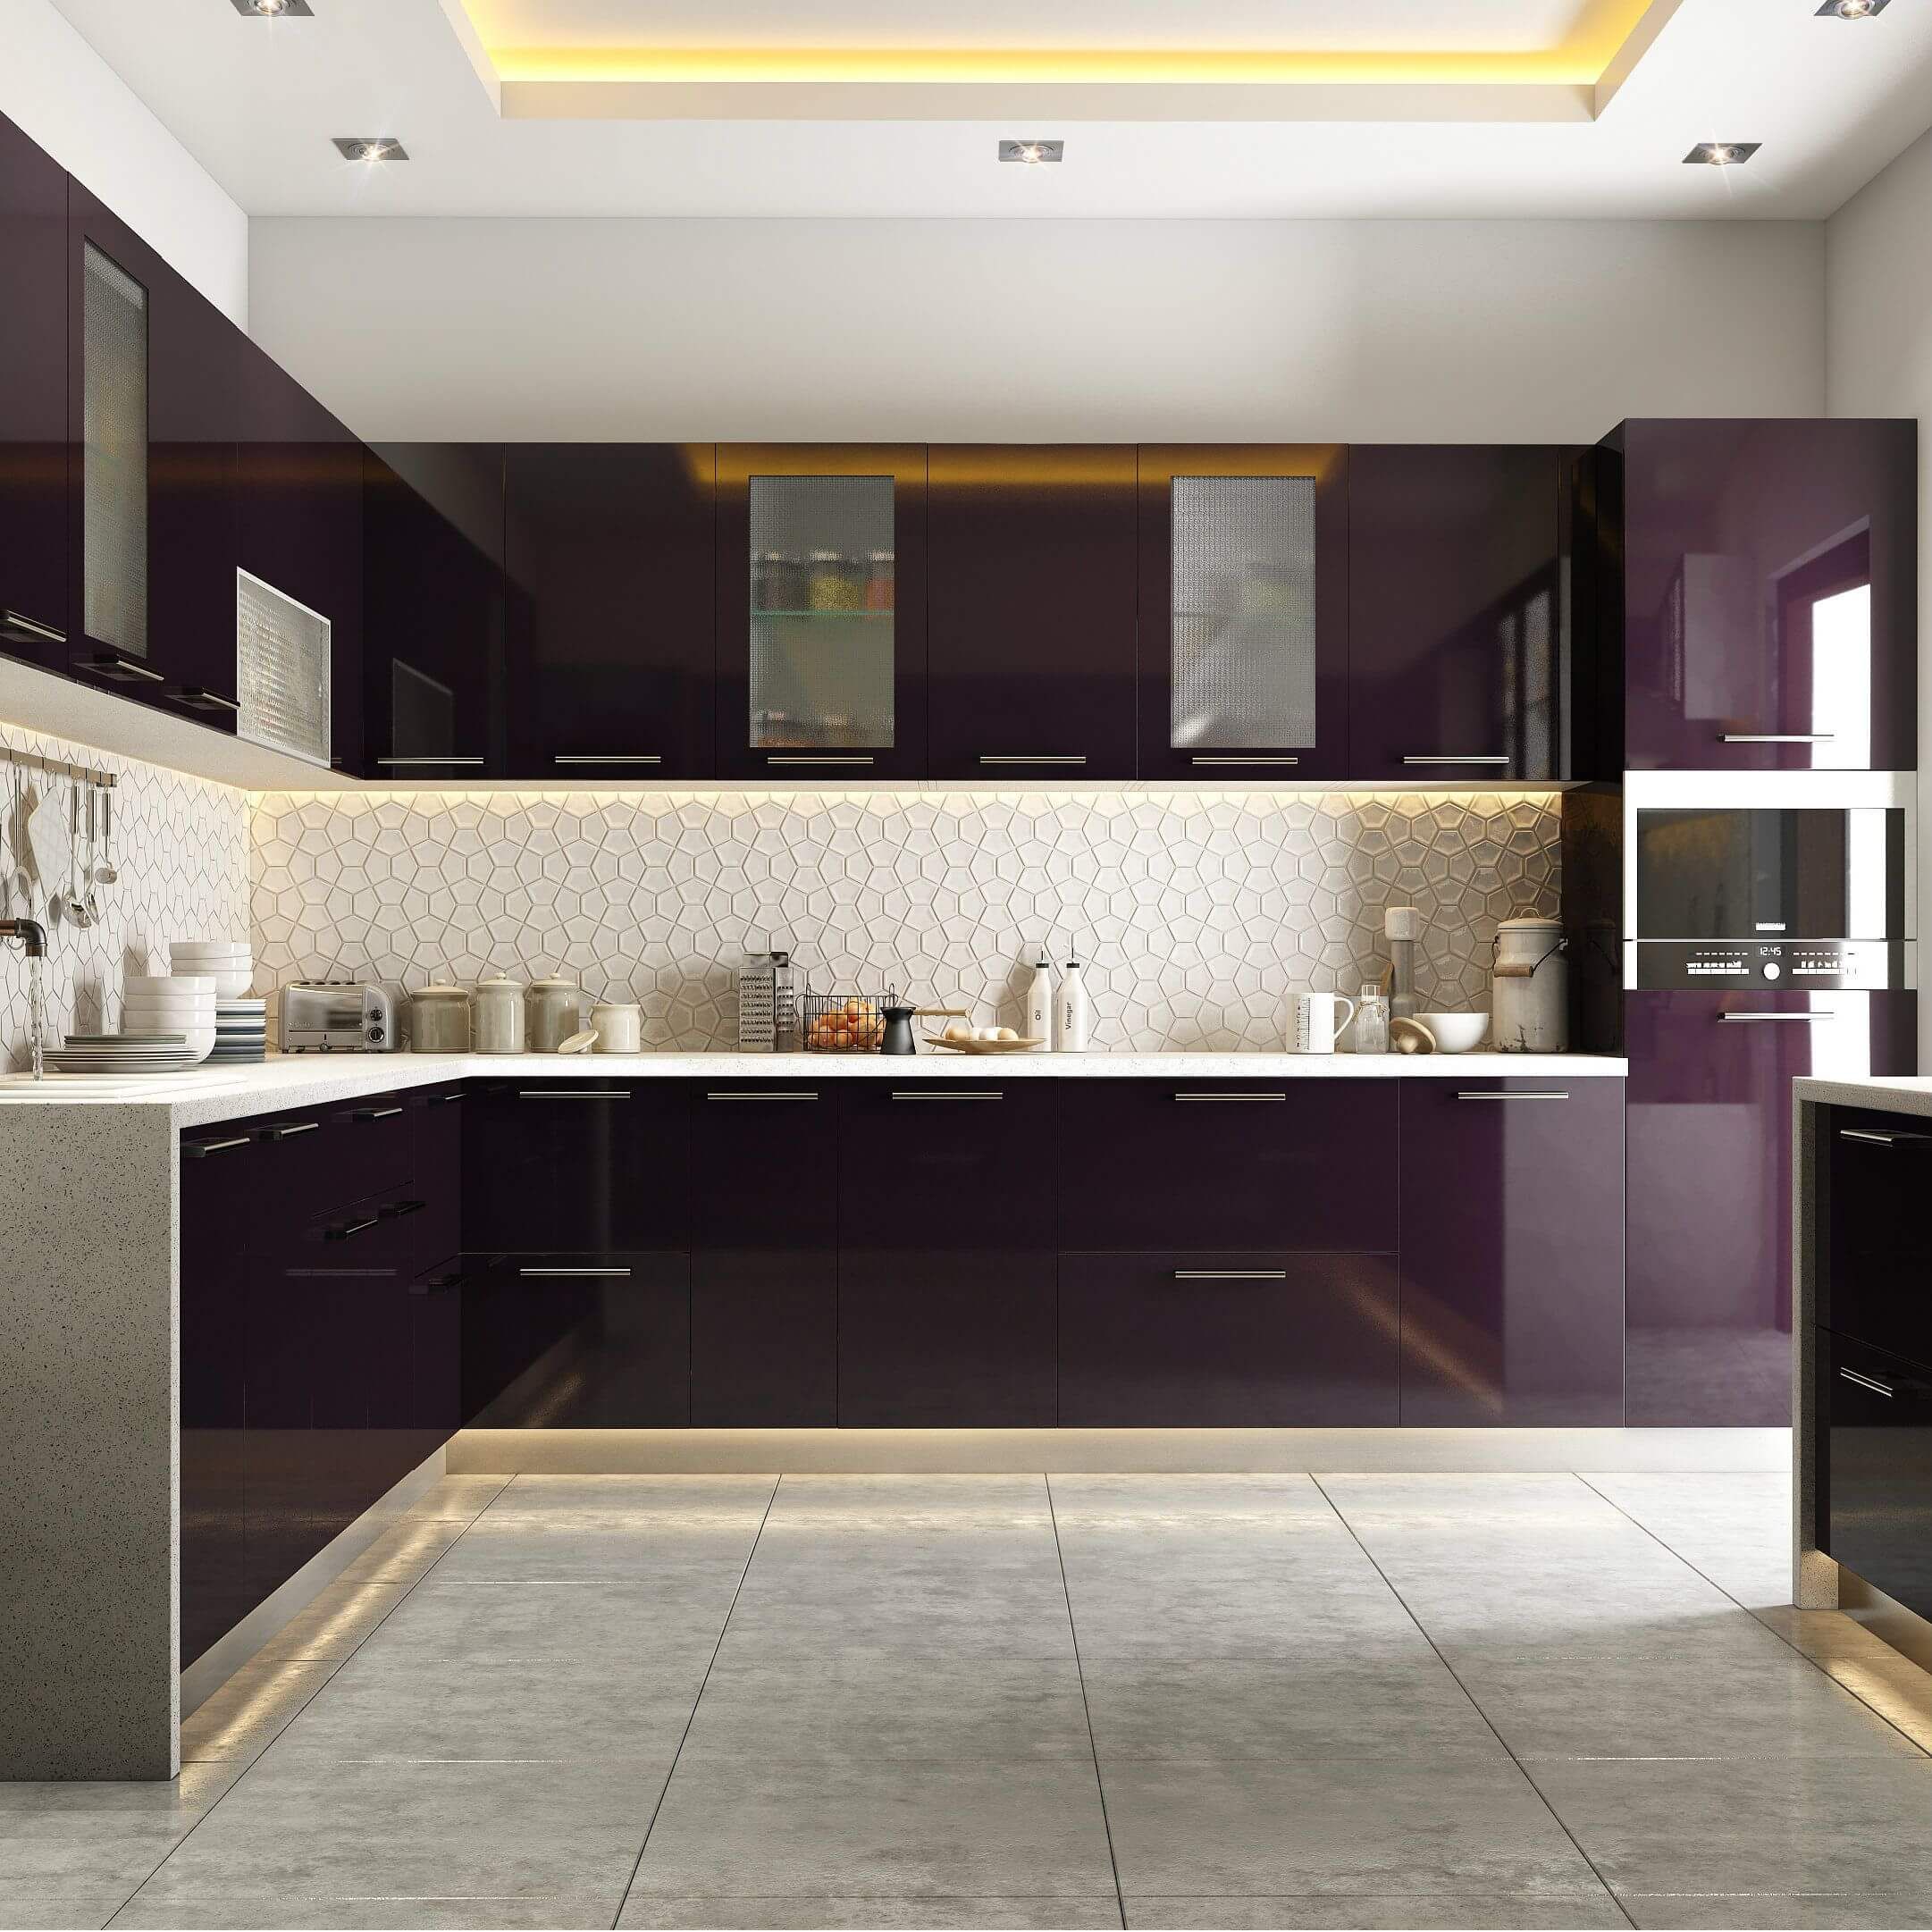 55+ Modular Kitchen Design Ideas For Indian Homes 30 August 2021